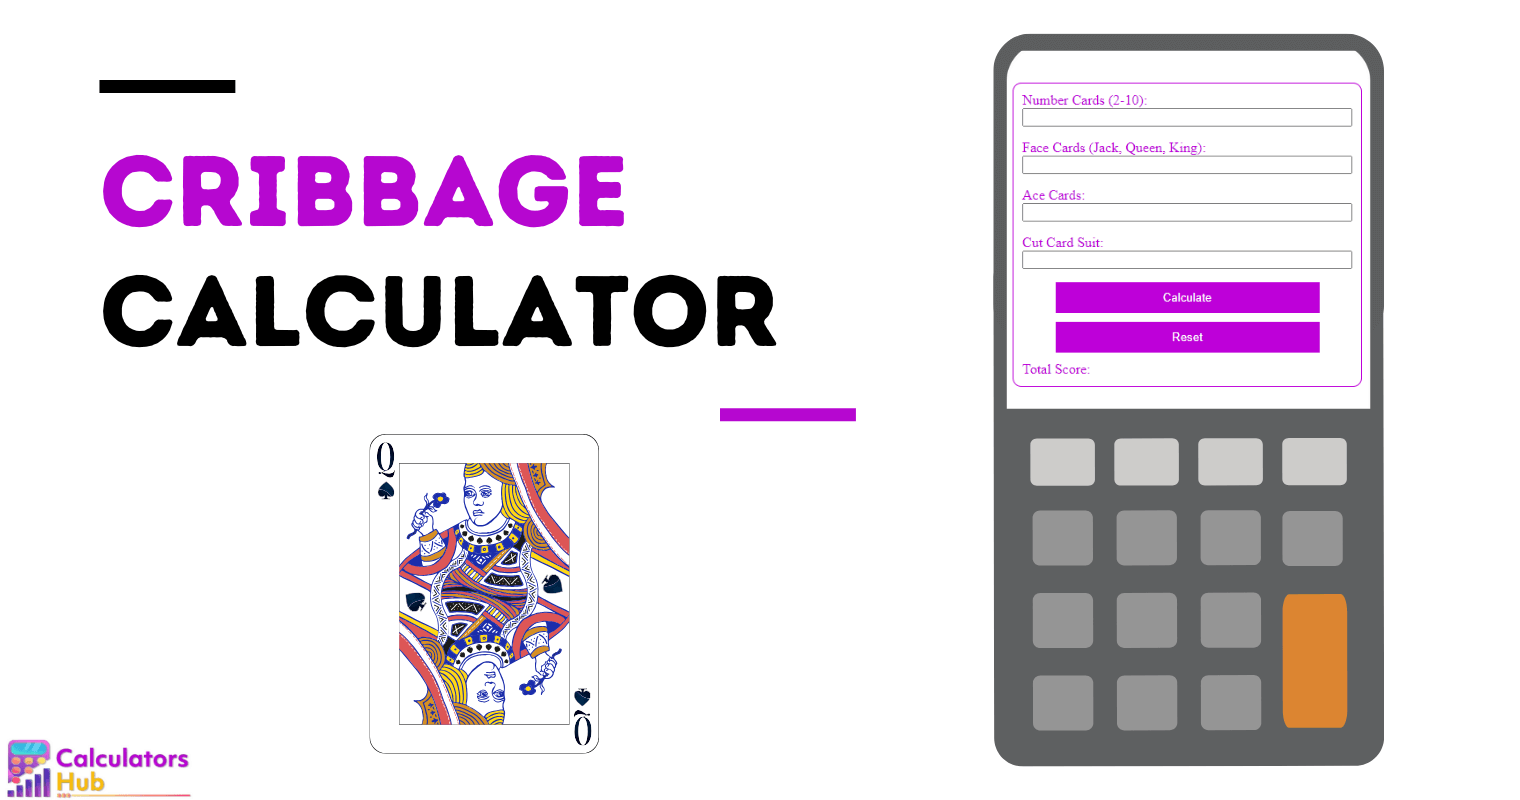 Cribbage Calculator